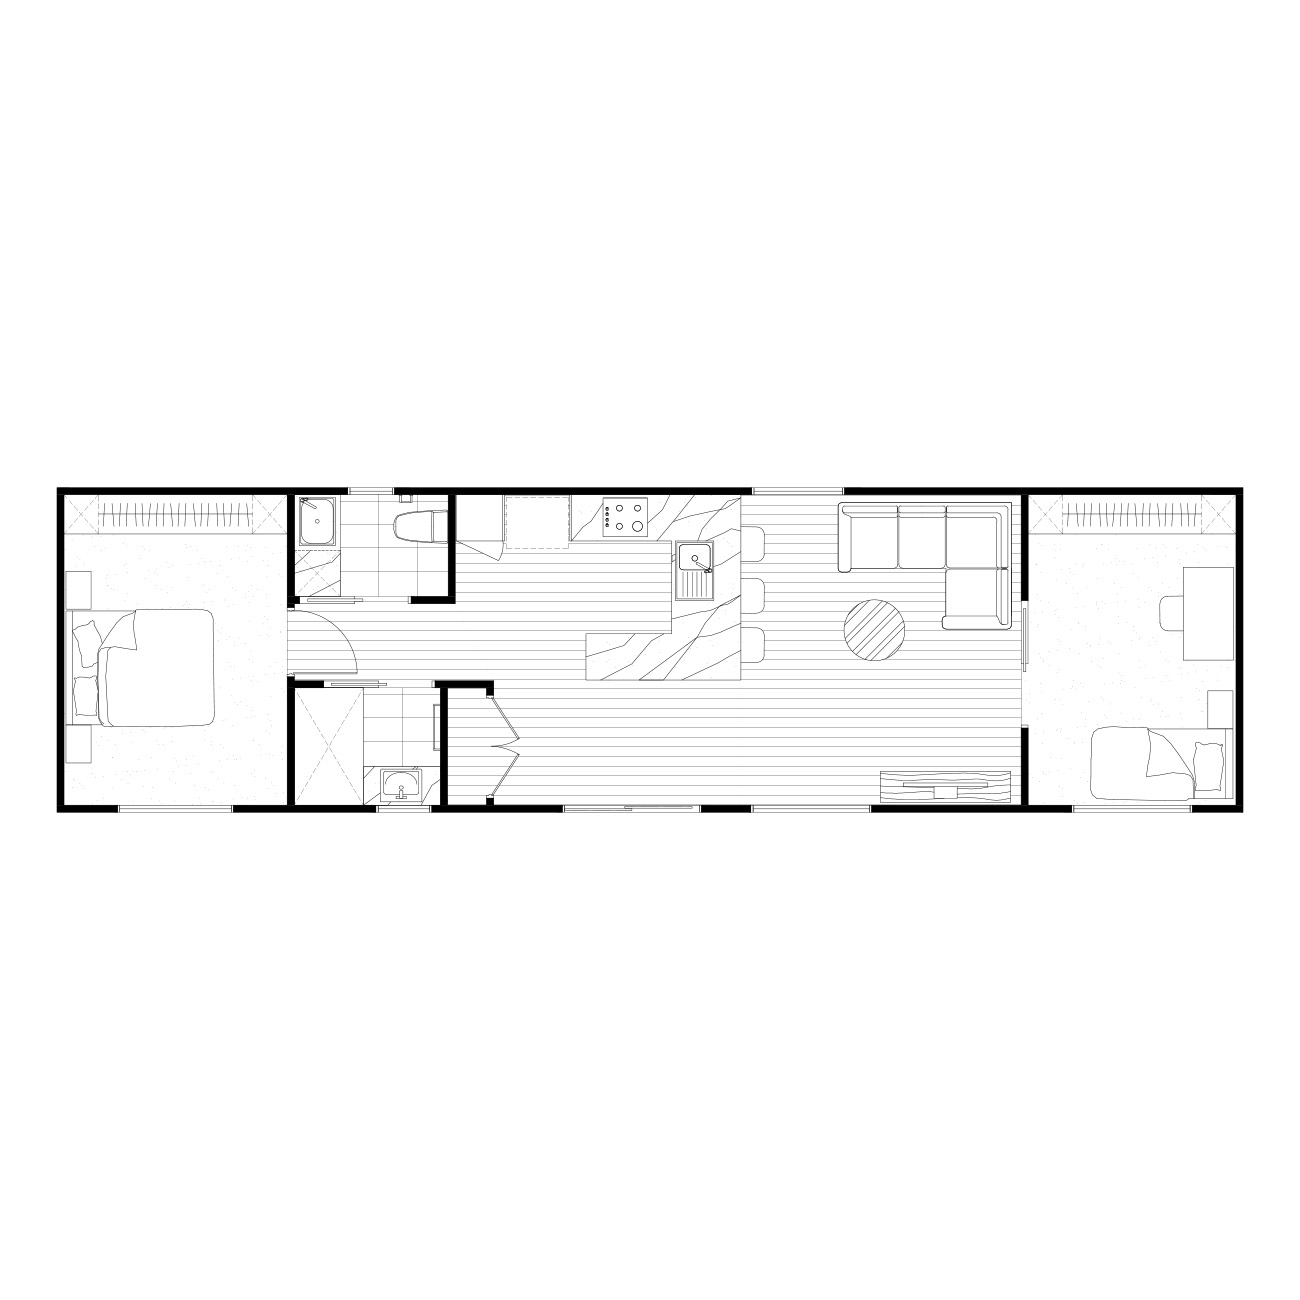 The Monaco modular home floorplan designed by Fox Modular